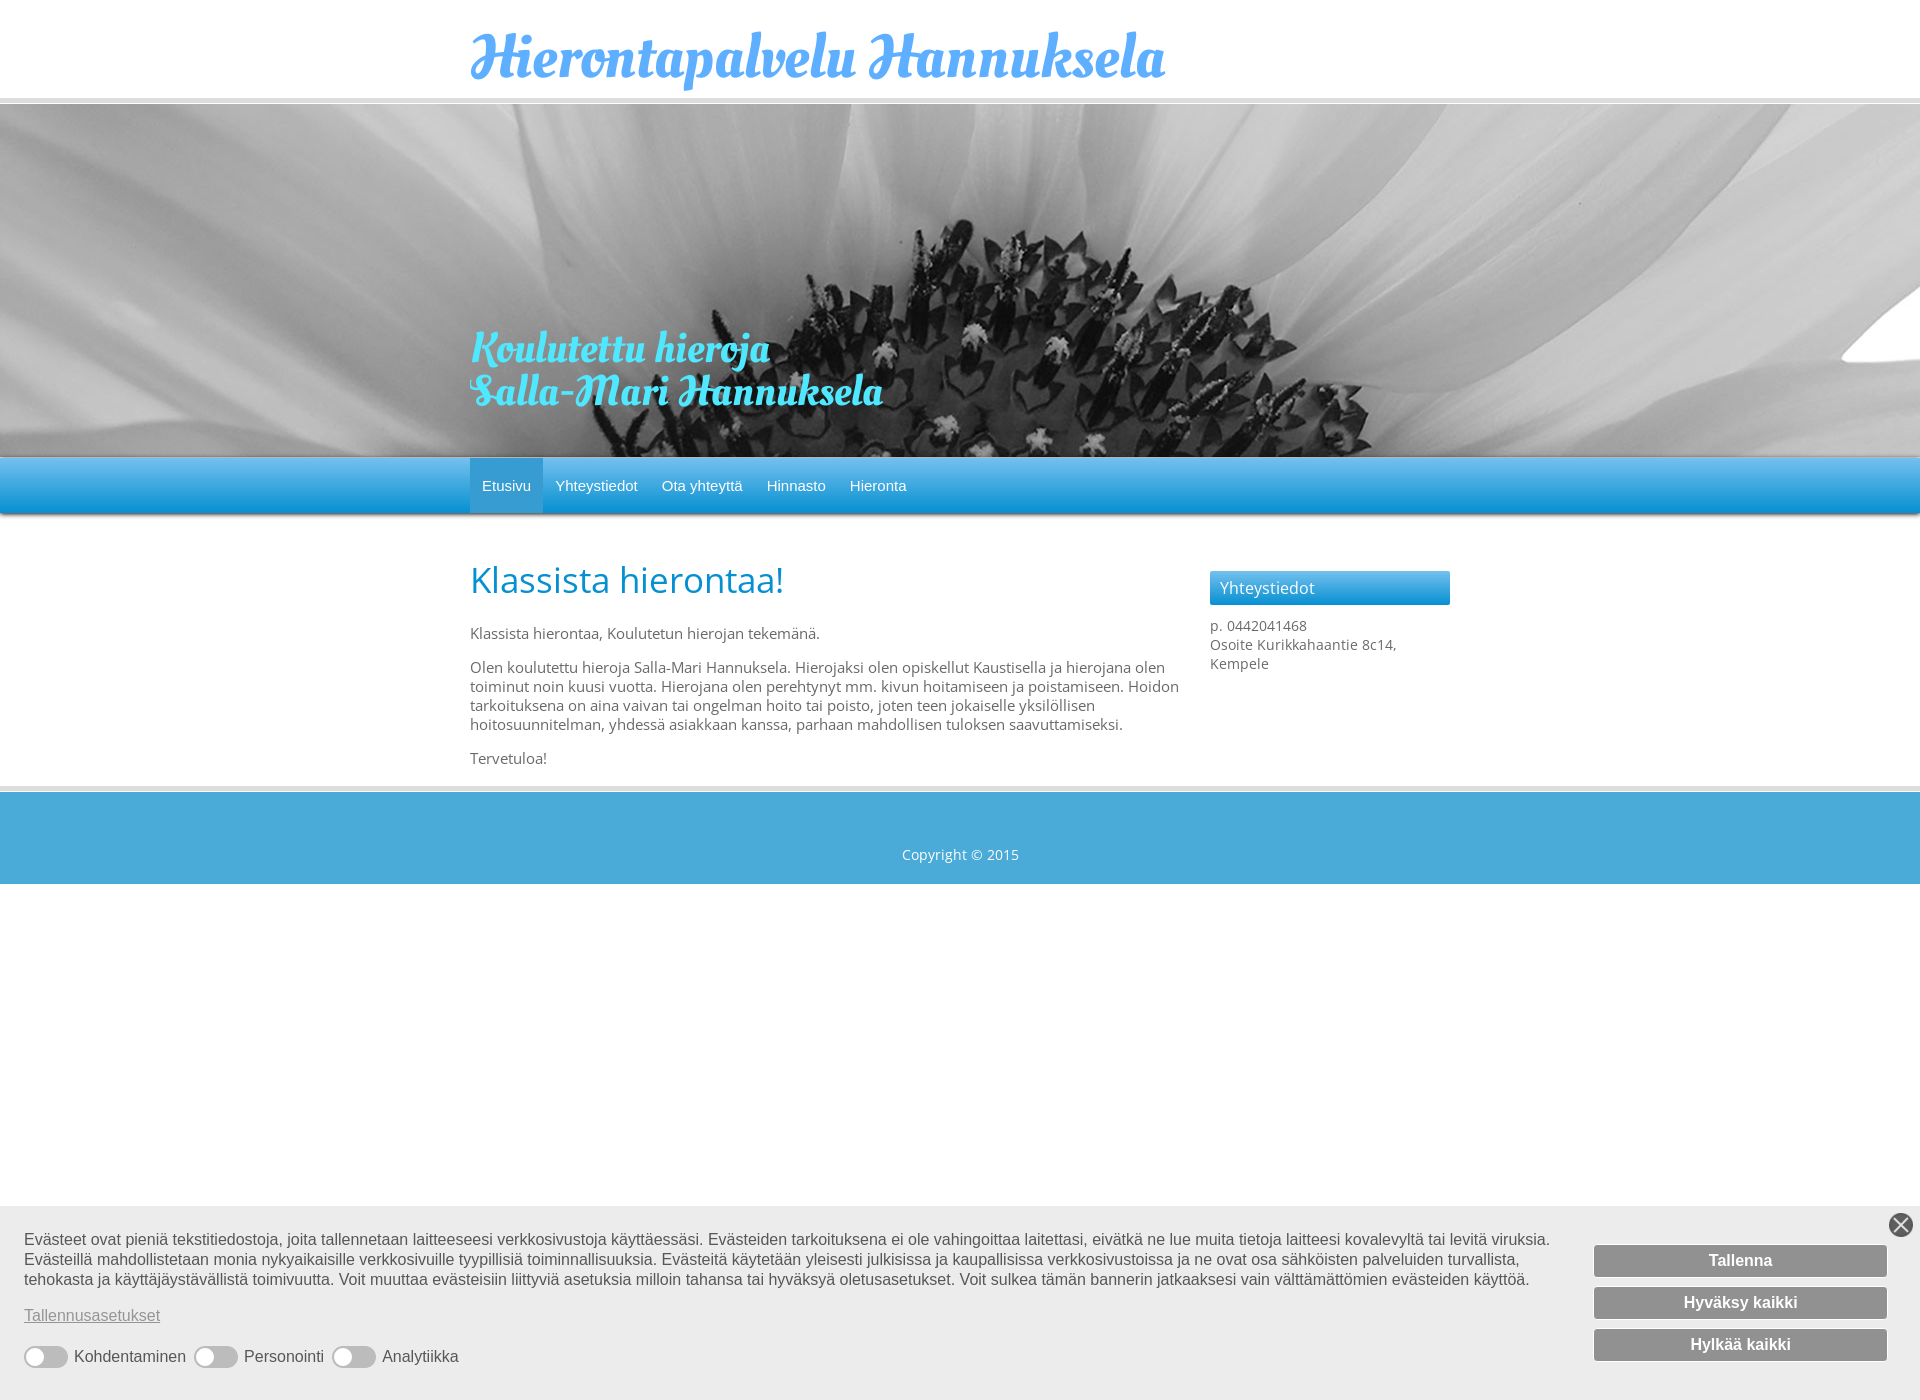 Screenshot for hierontapalveluhannuksela.fi